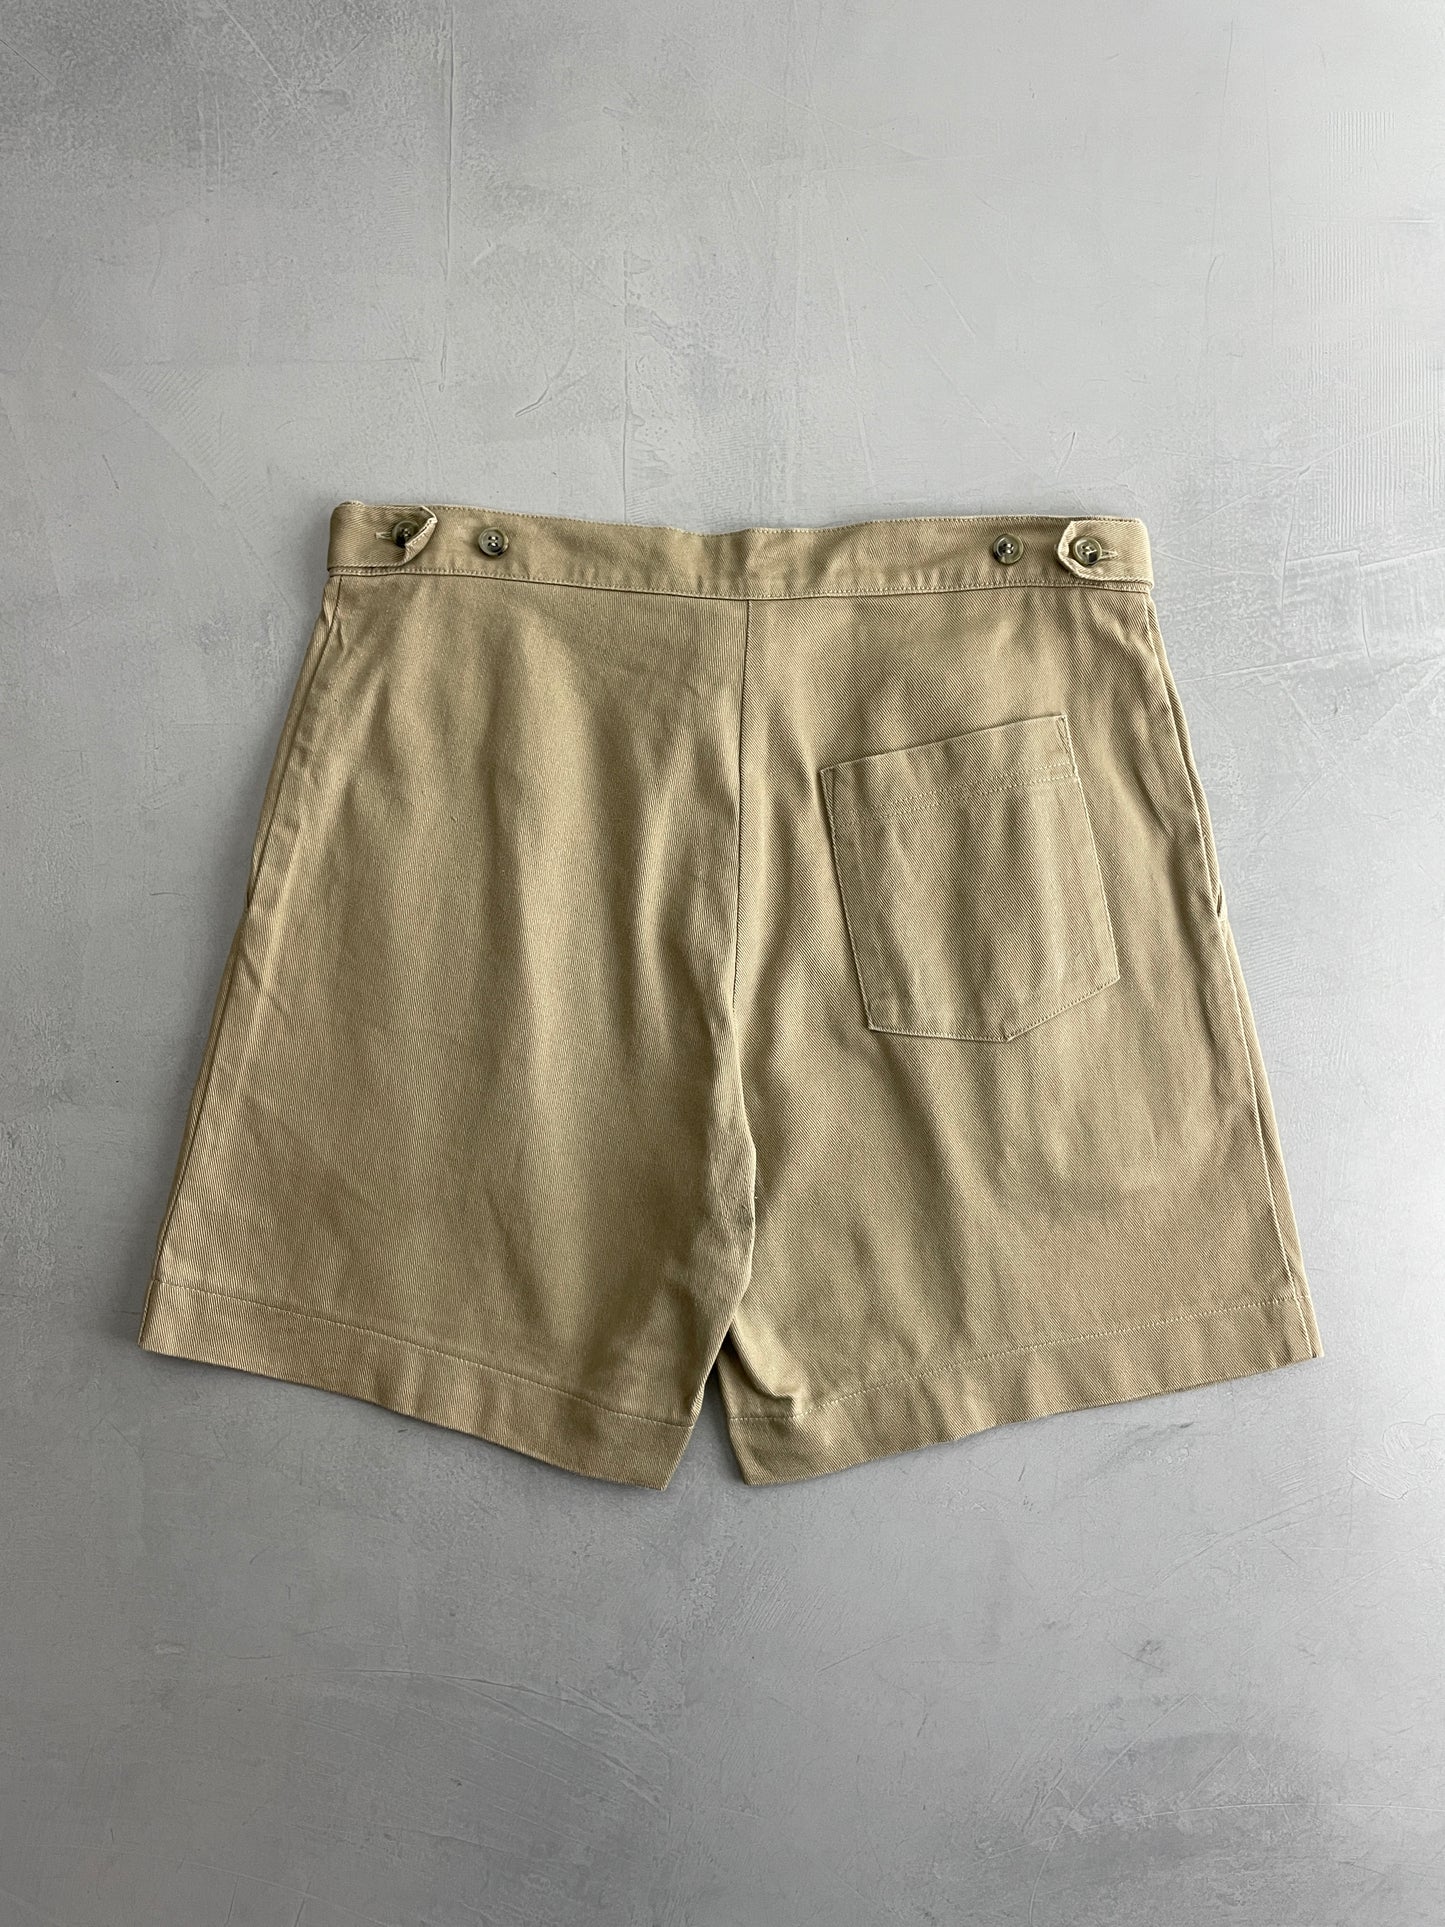 Buxwear Work Shorts [32"]